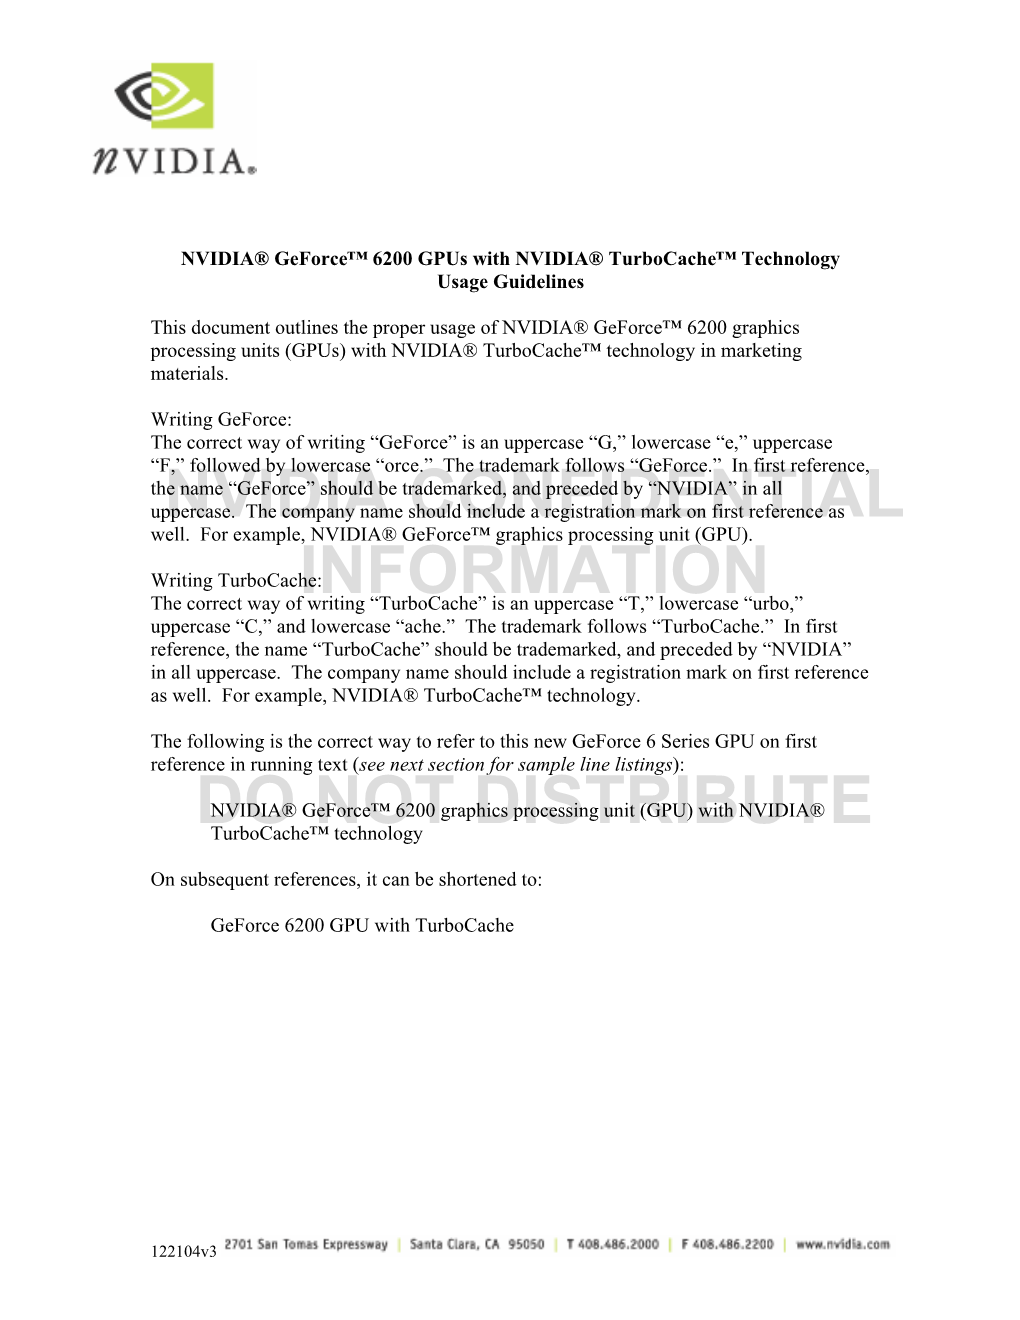 NVIDIA® Geforce™ 6200 Gpus with NVIDIA® Turbocache™ Technology Usage Guidelines